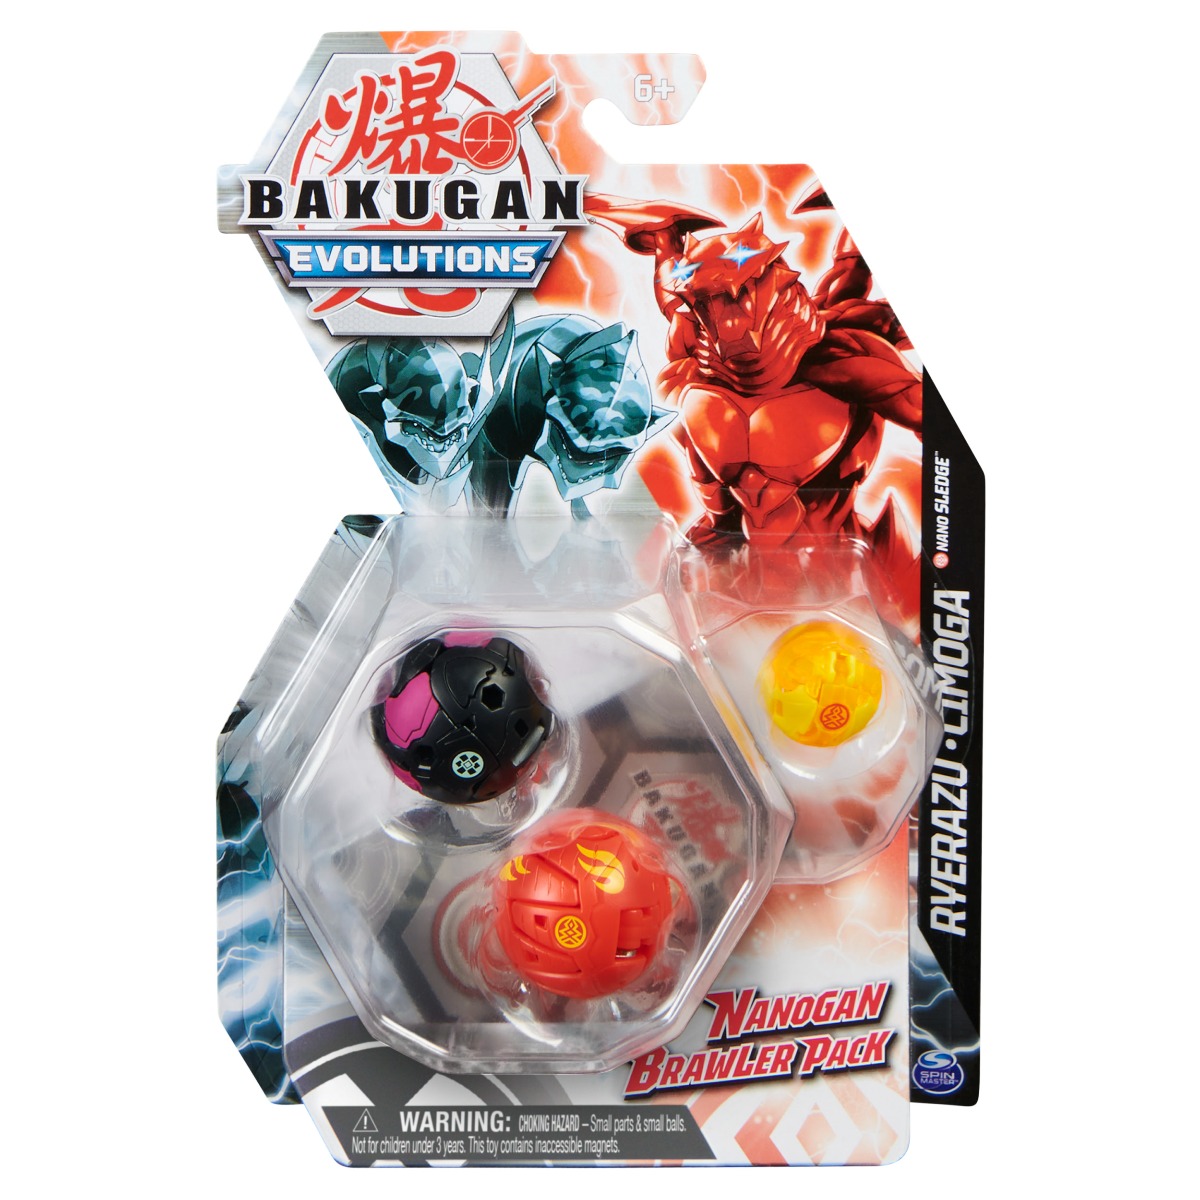 Pachet Bakugan Evolutions, 2 Basic, 1 Nanogan, Ryerazu Bakugan